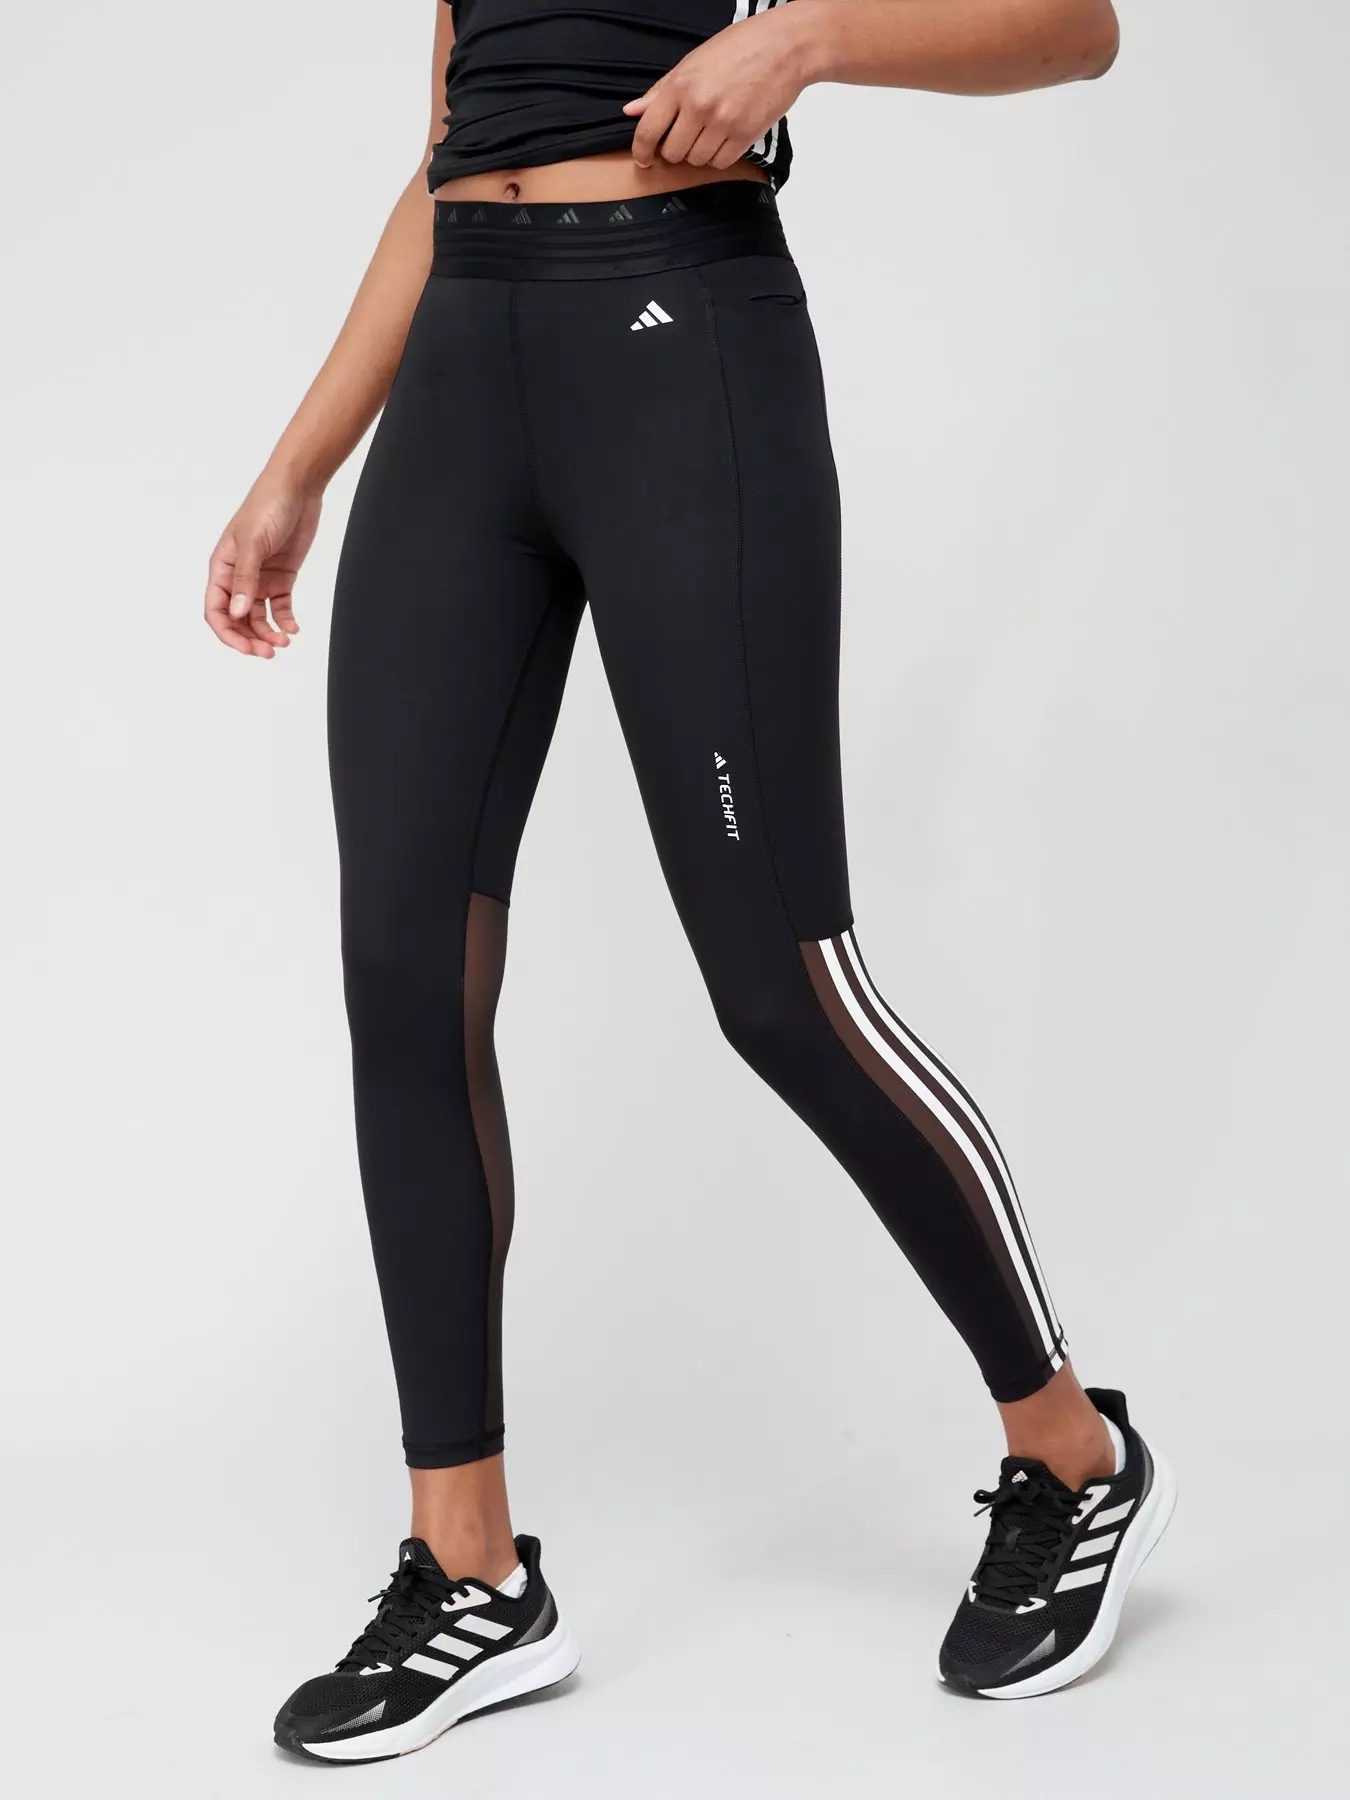 Adidas FLORAL PRINT CAPRI TIGHT Techfit CLIMALITE Legging Yoga Runing  Pant~Sz XL